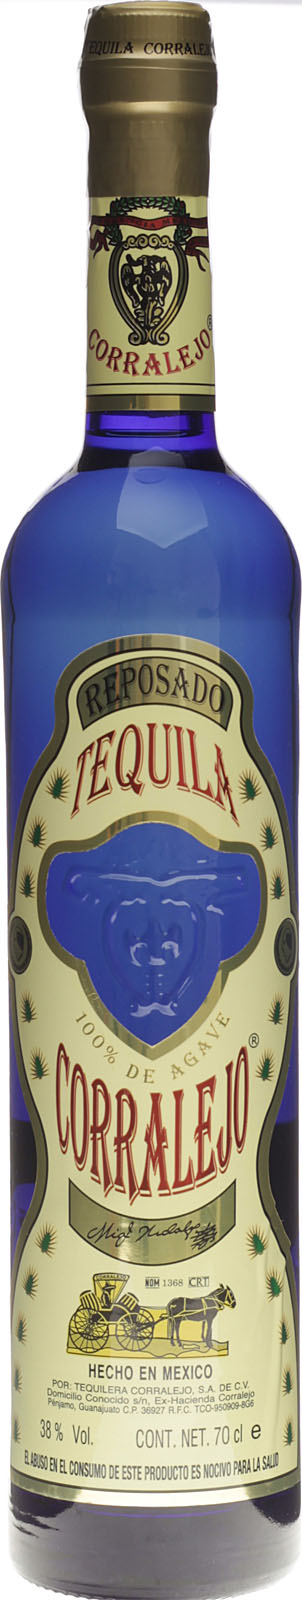 Corralejo Reposado Tequila hier im kaufen Onlineshop